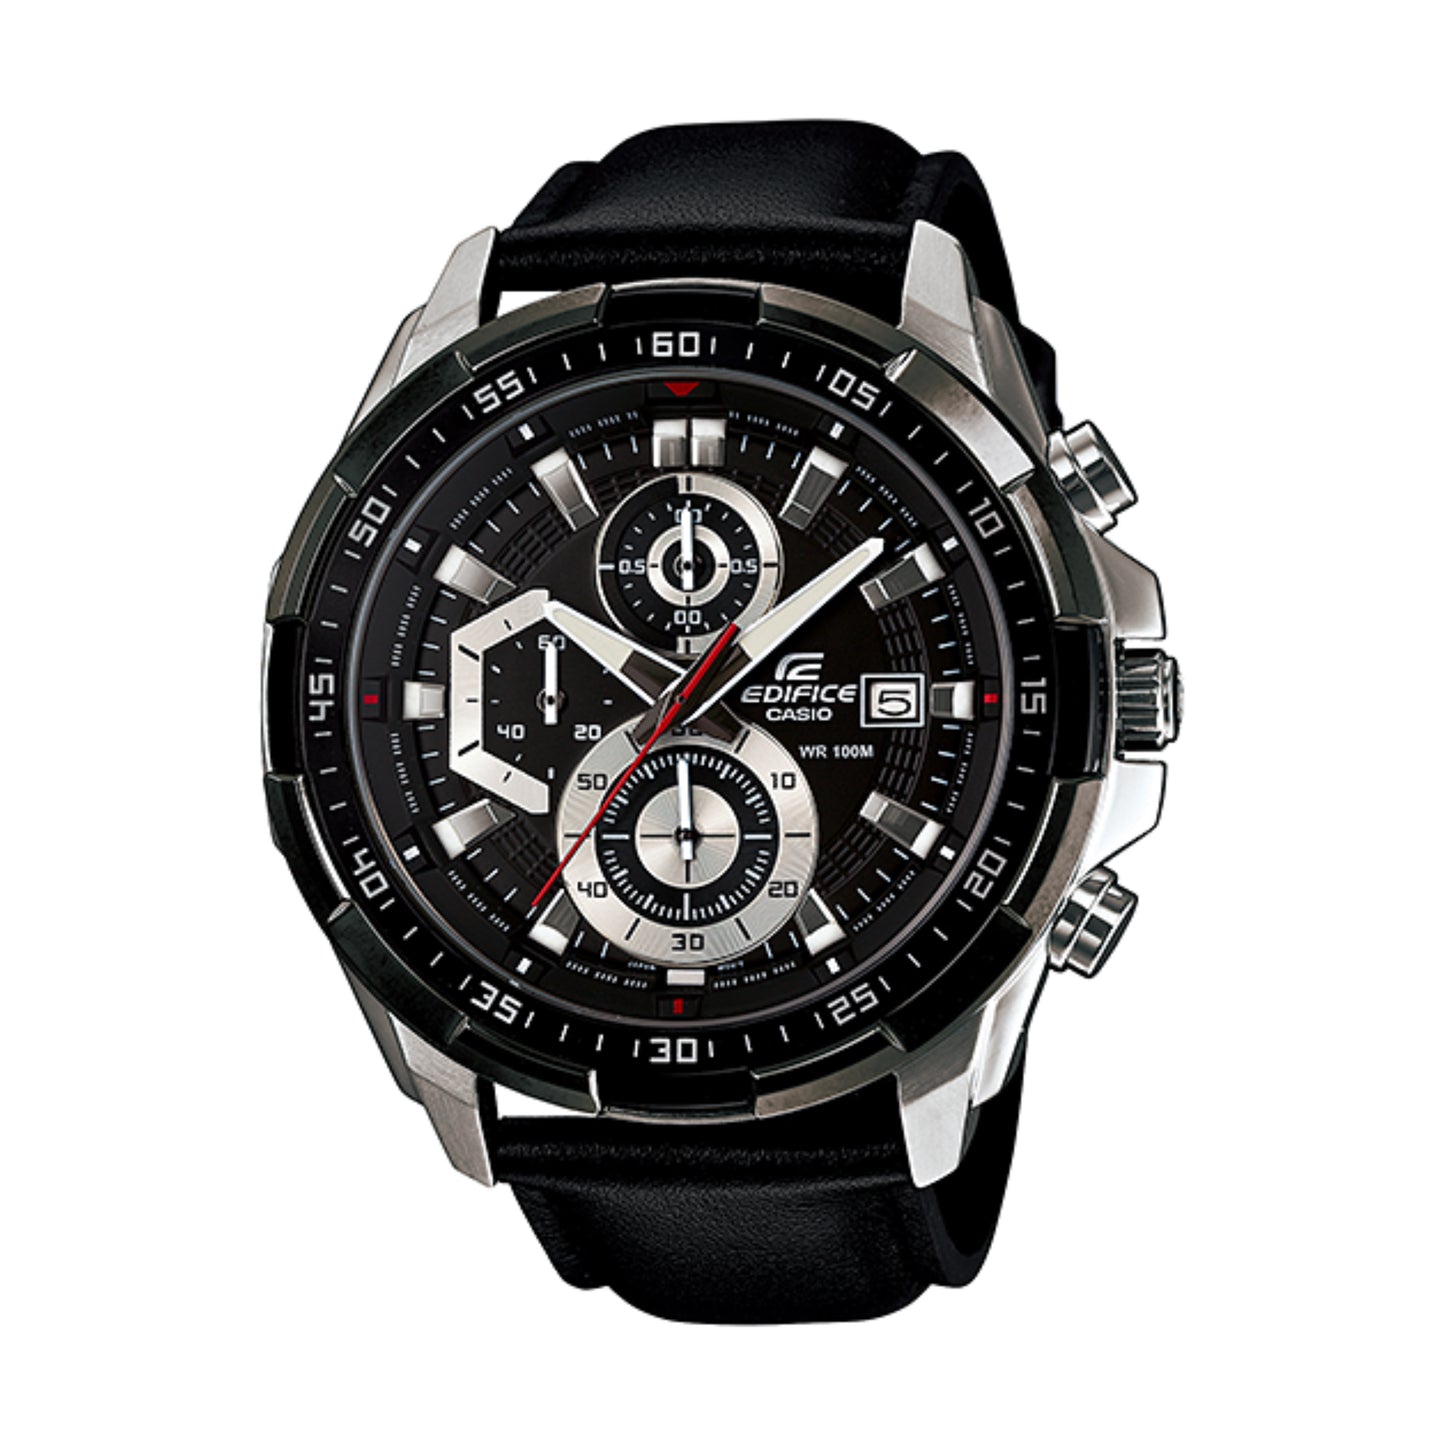 Casio Edifice EFR-539L-1AV Men's Leather Band Watch